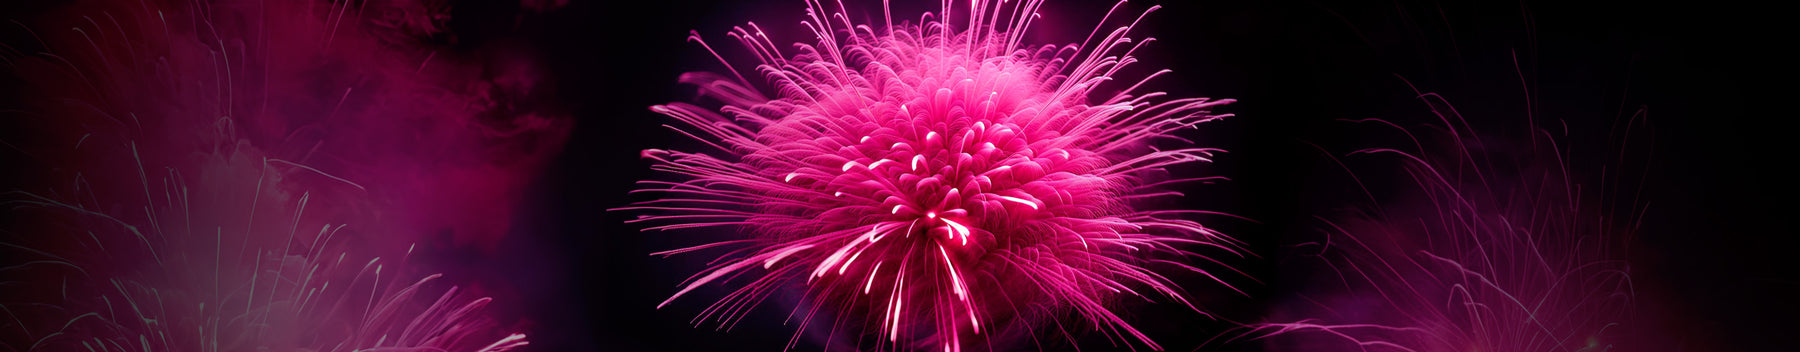 The Science Behind Pink Gender Reveal Fireworks